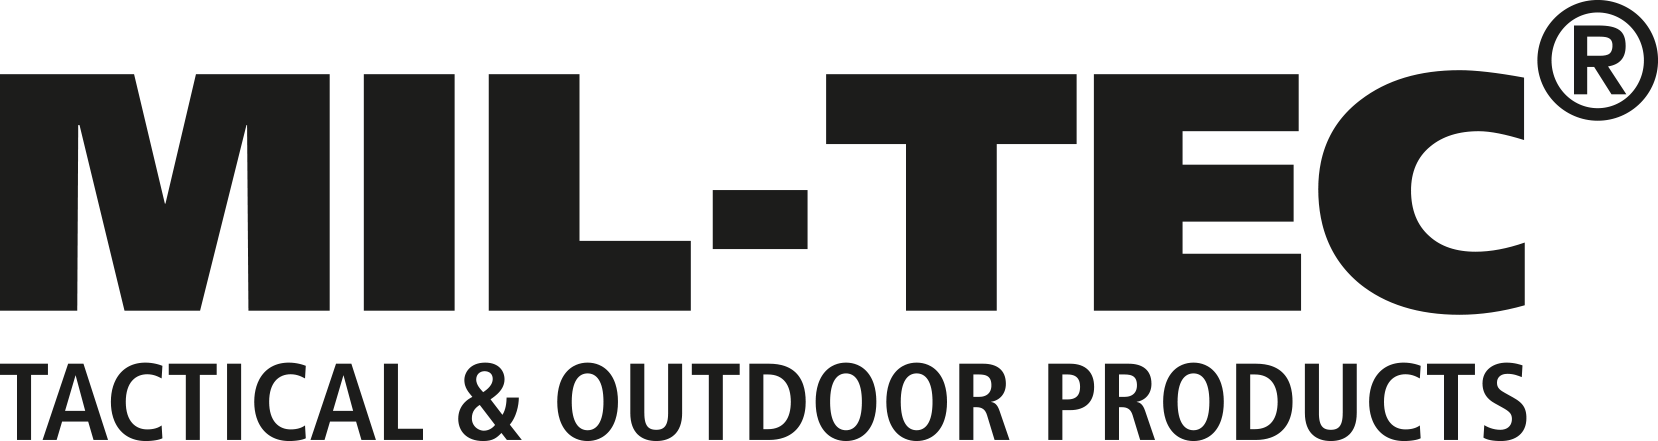 Logo MIL-TEC